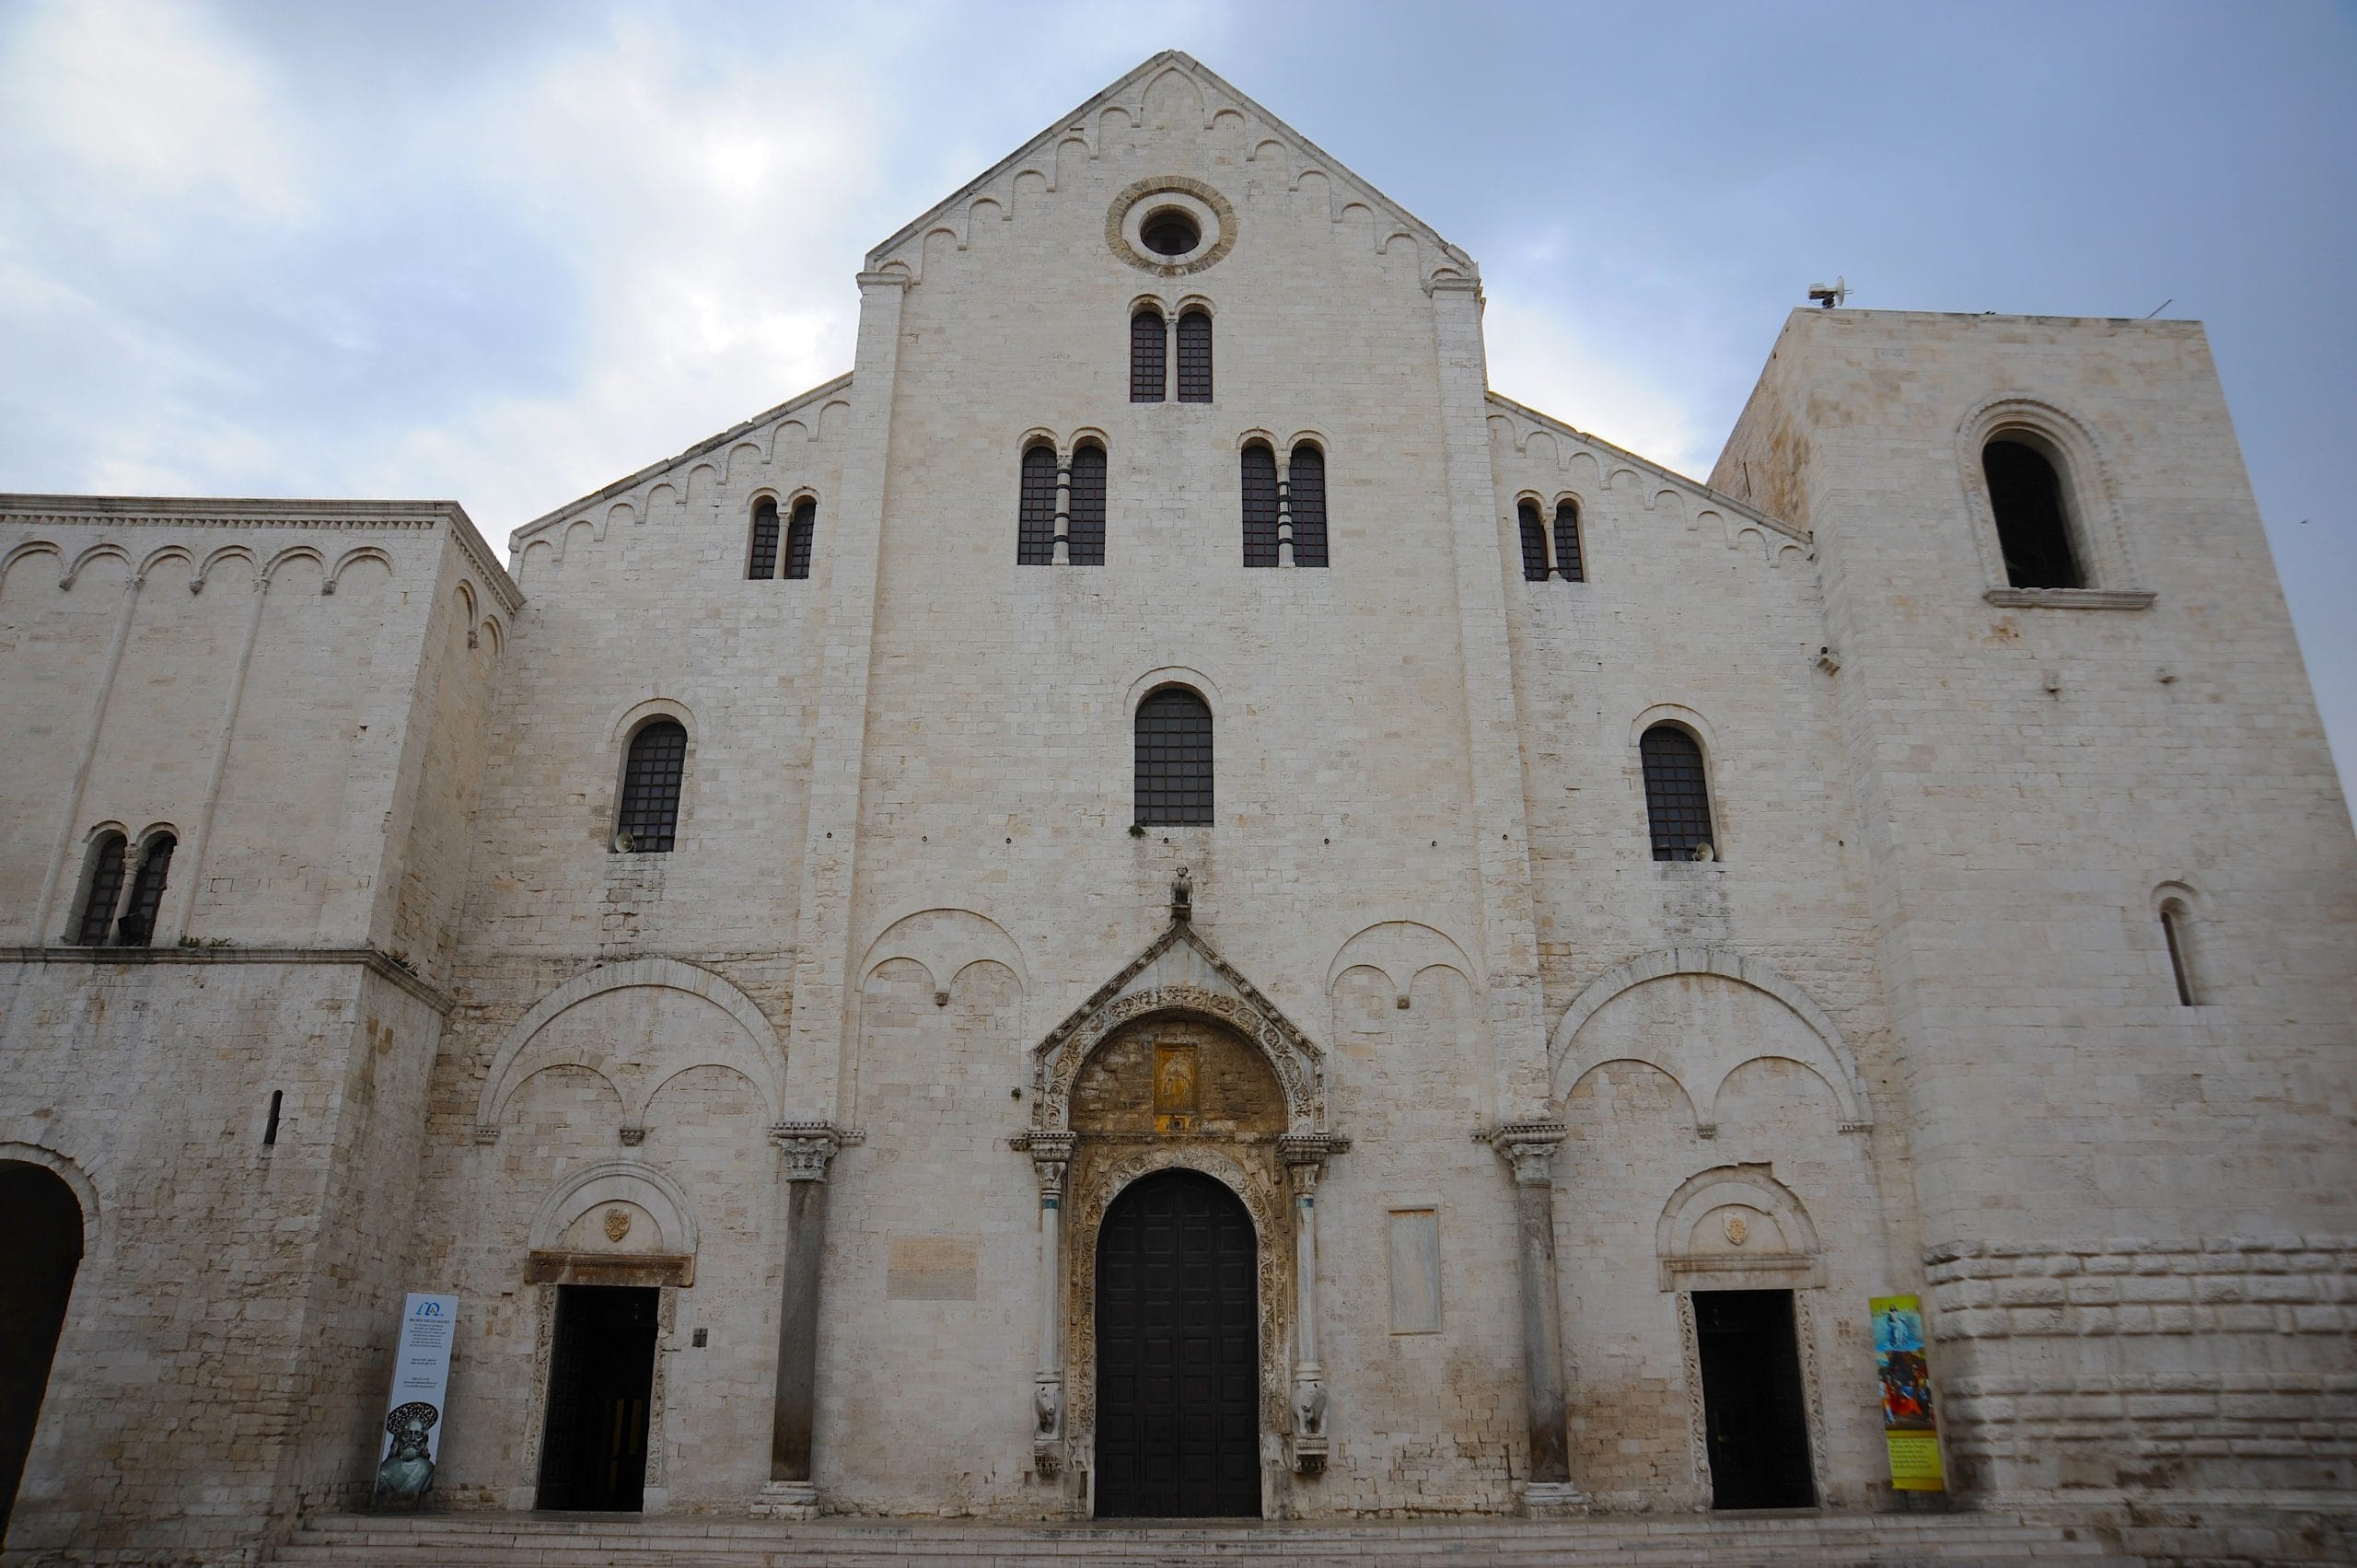 St. Nikolaos Church in Bari, Italy